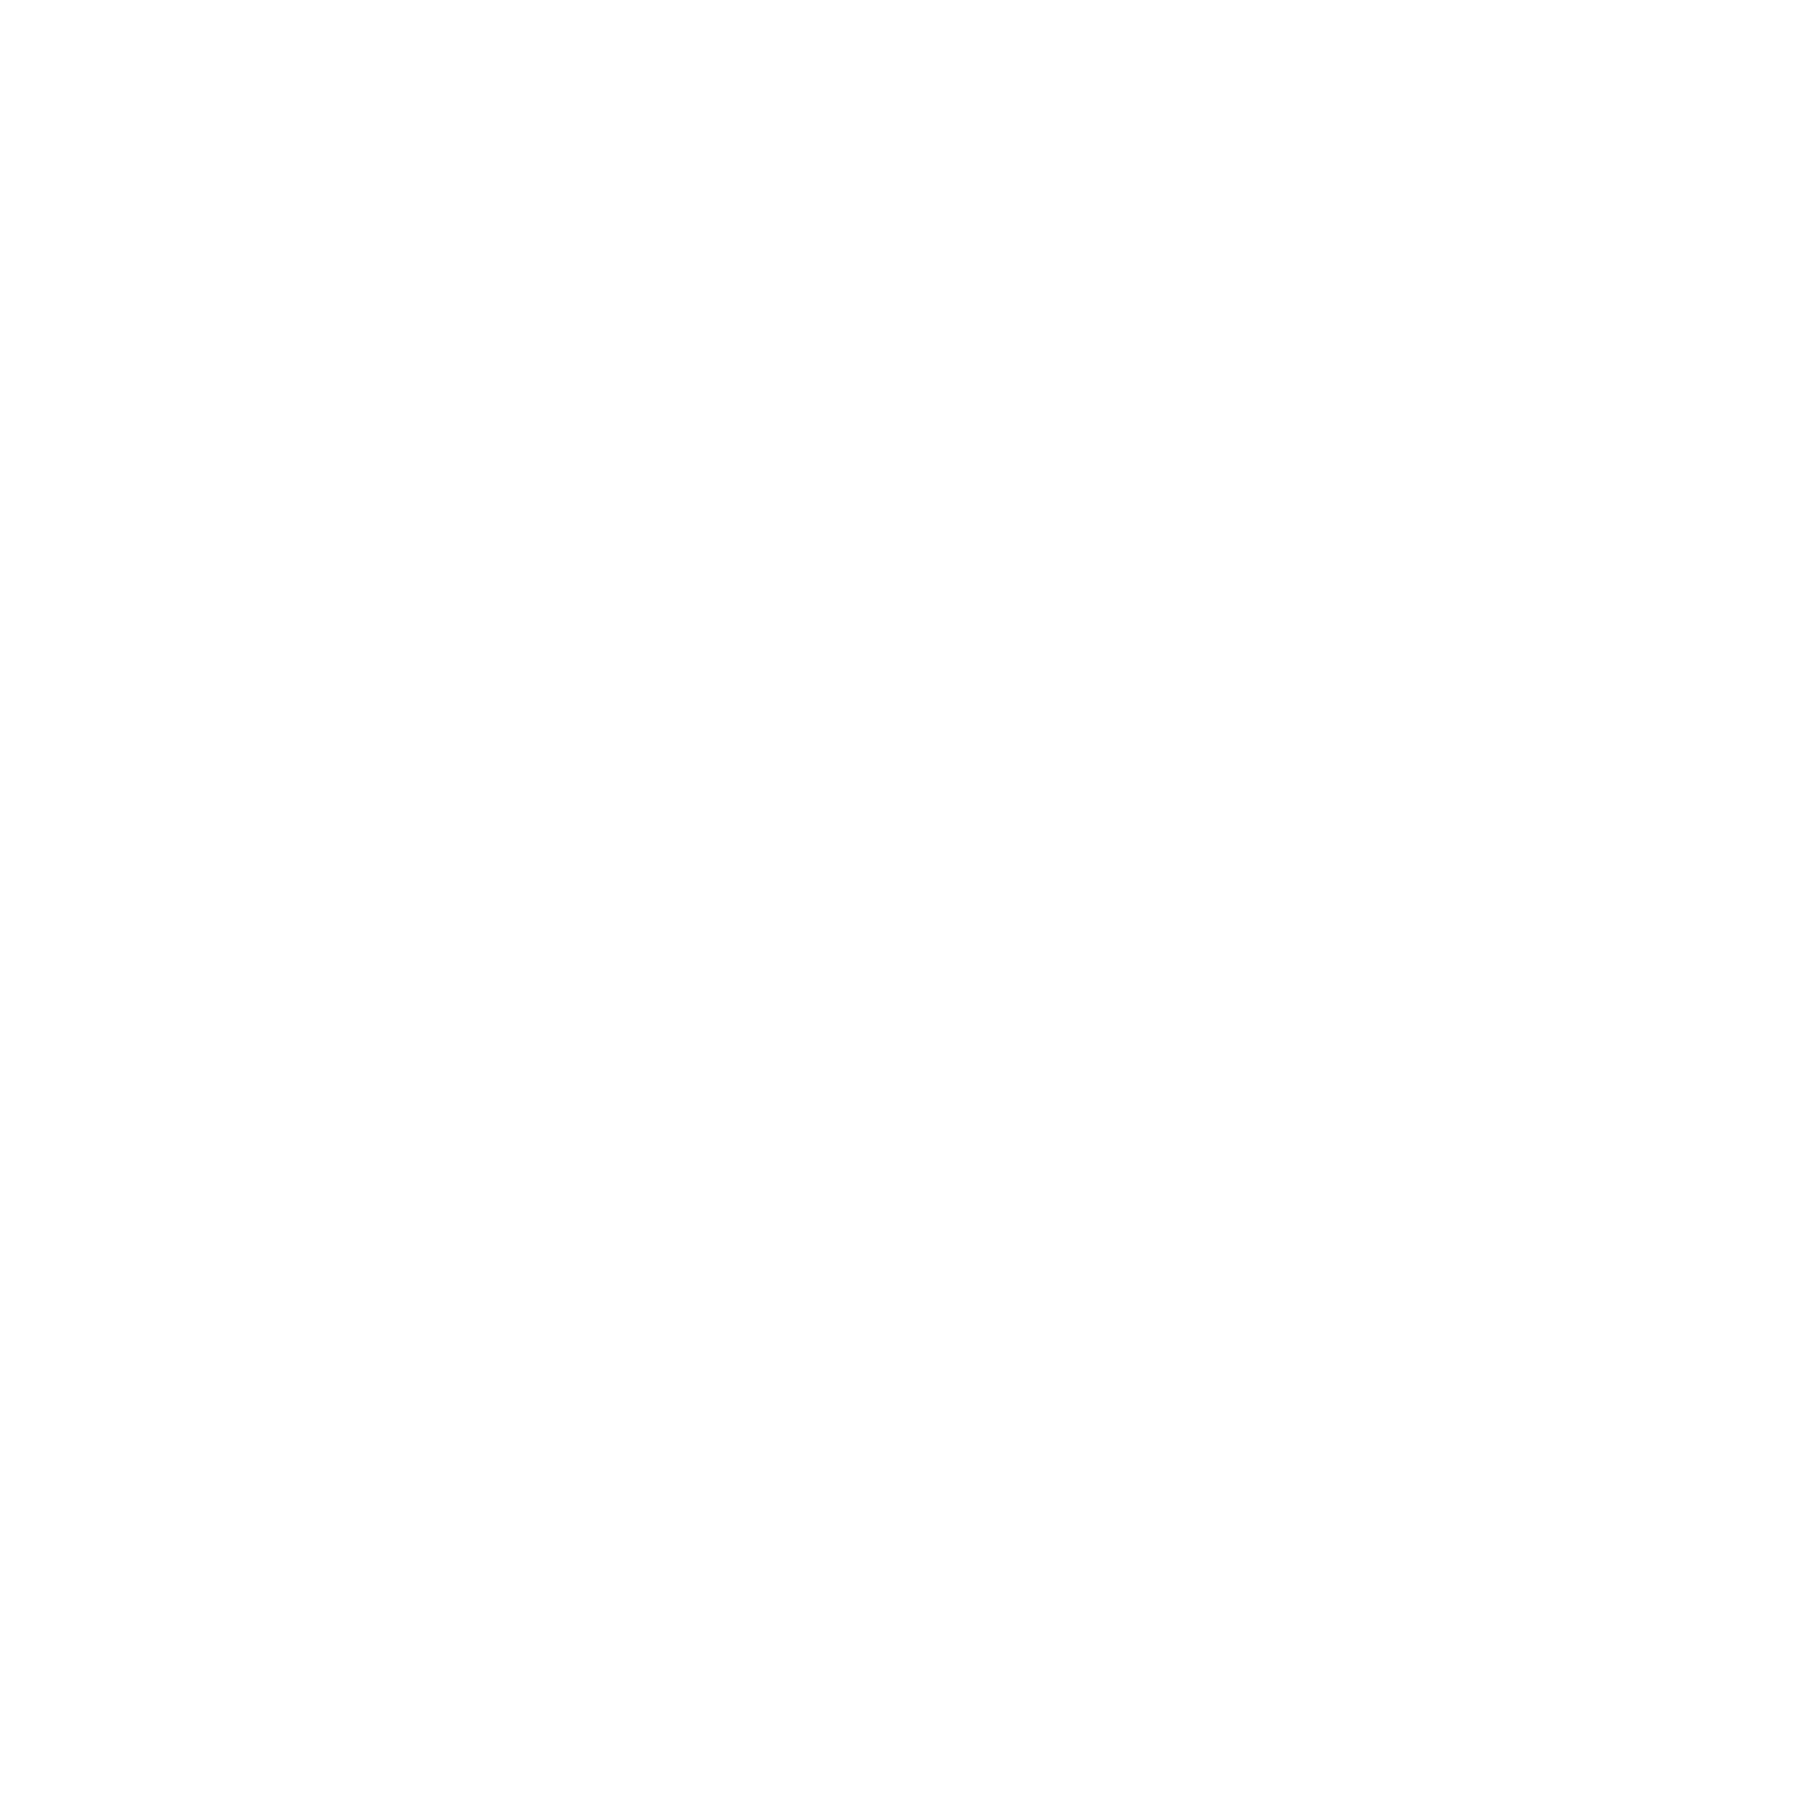 Triplebeam Worldwide